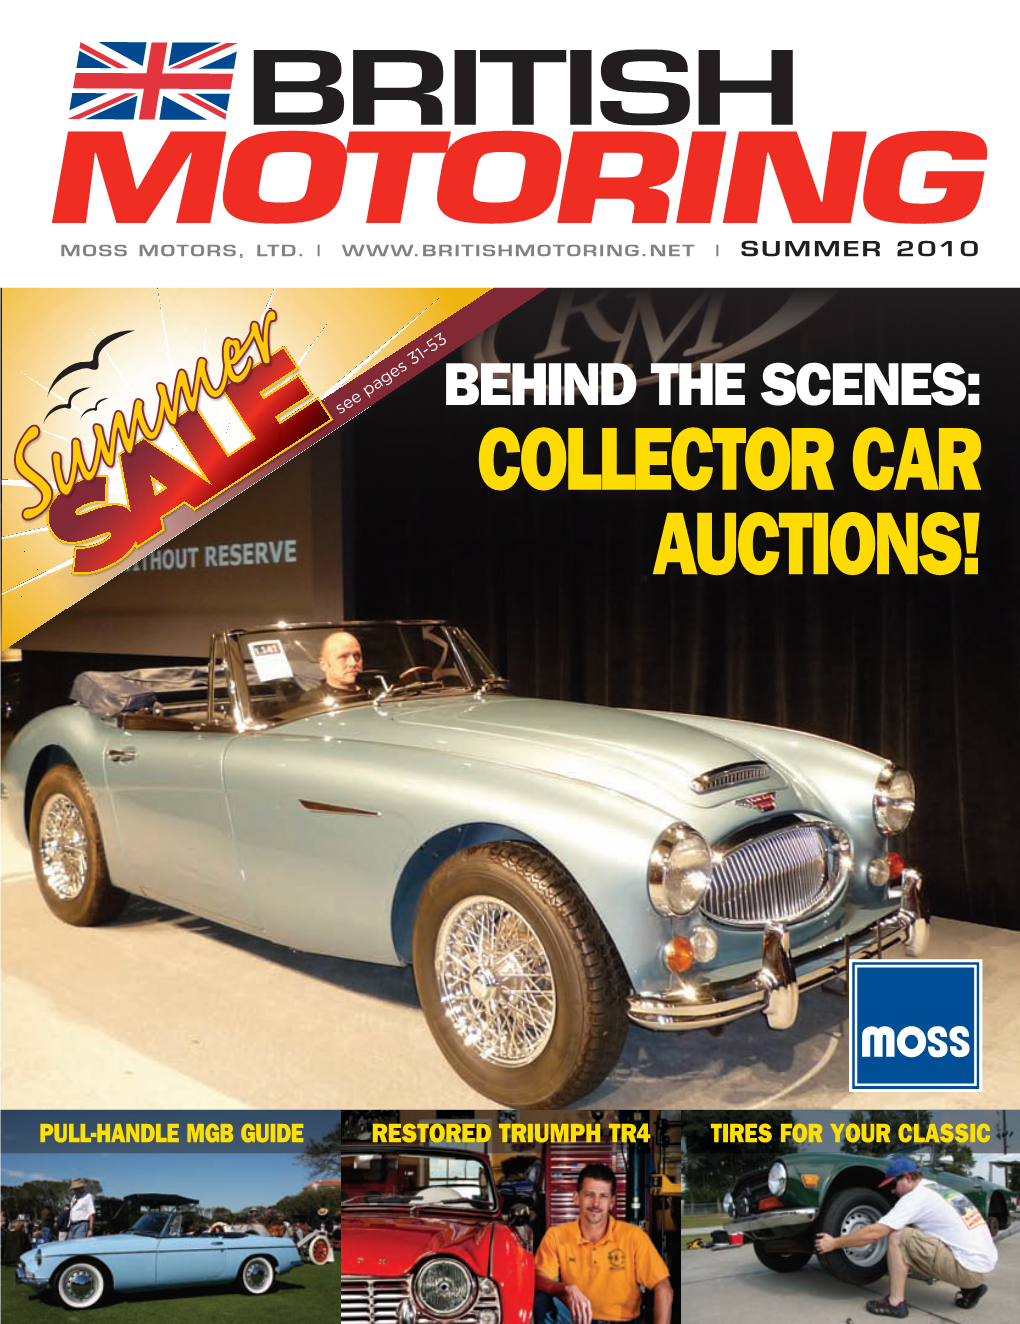 British Motoring Moss Motors, LTD